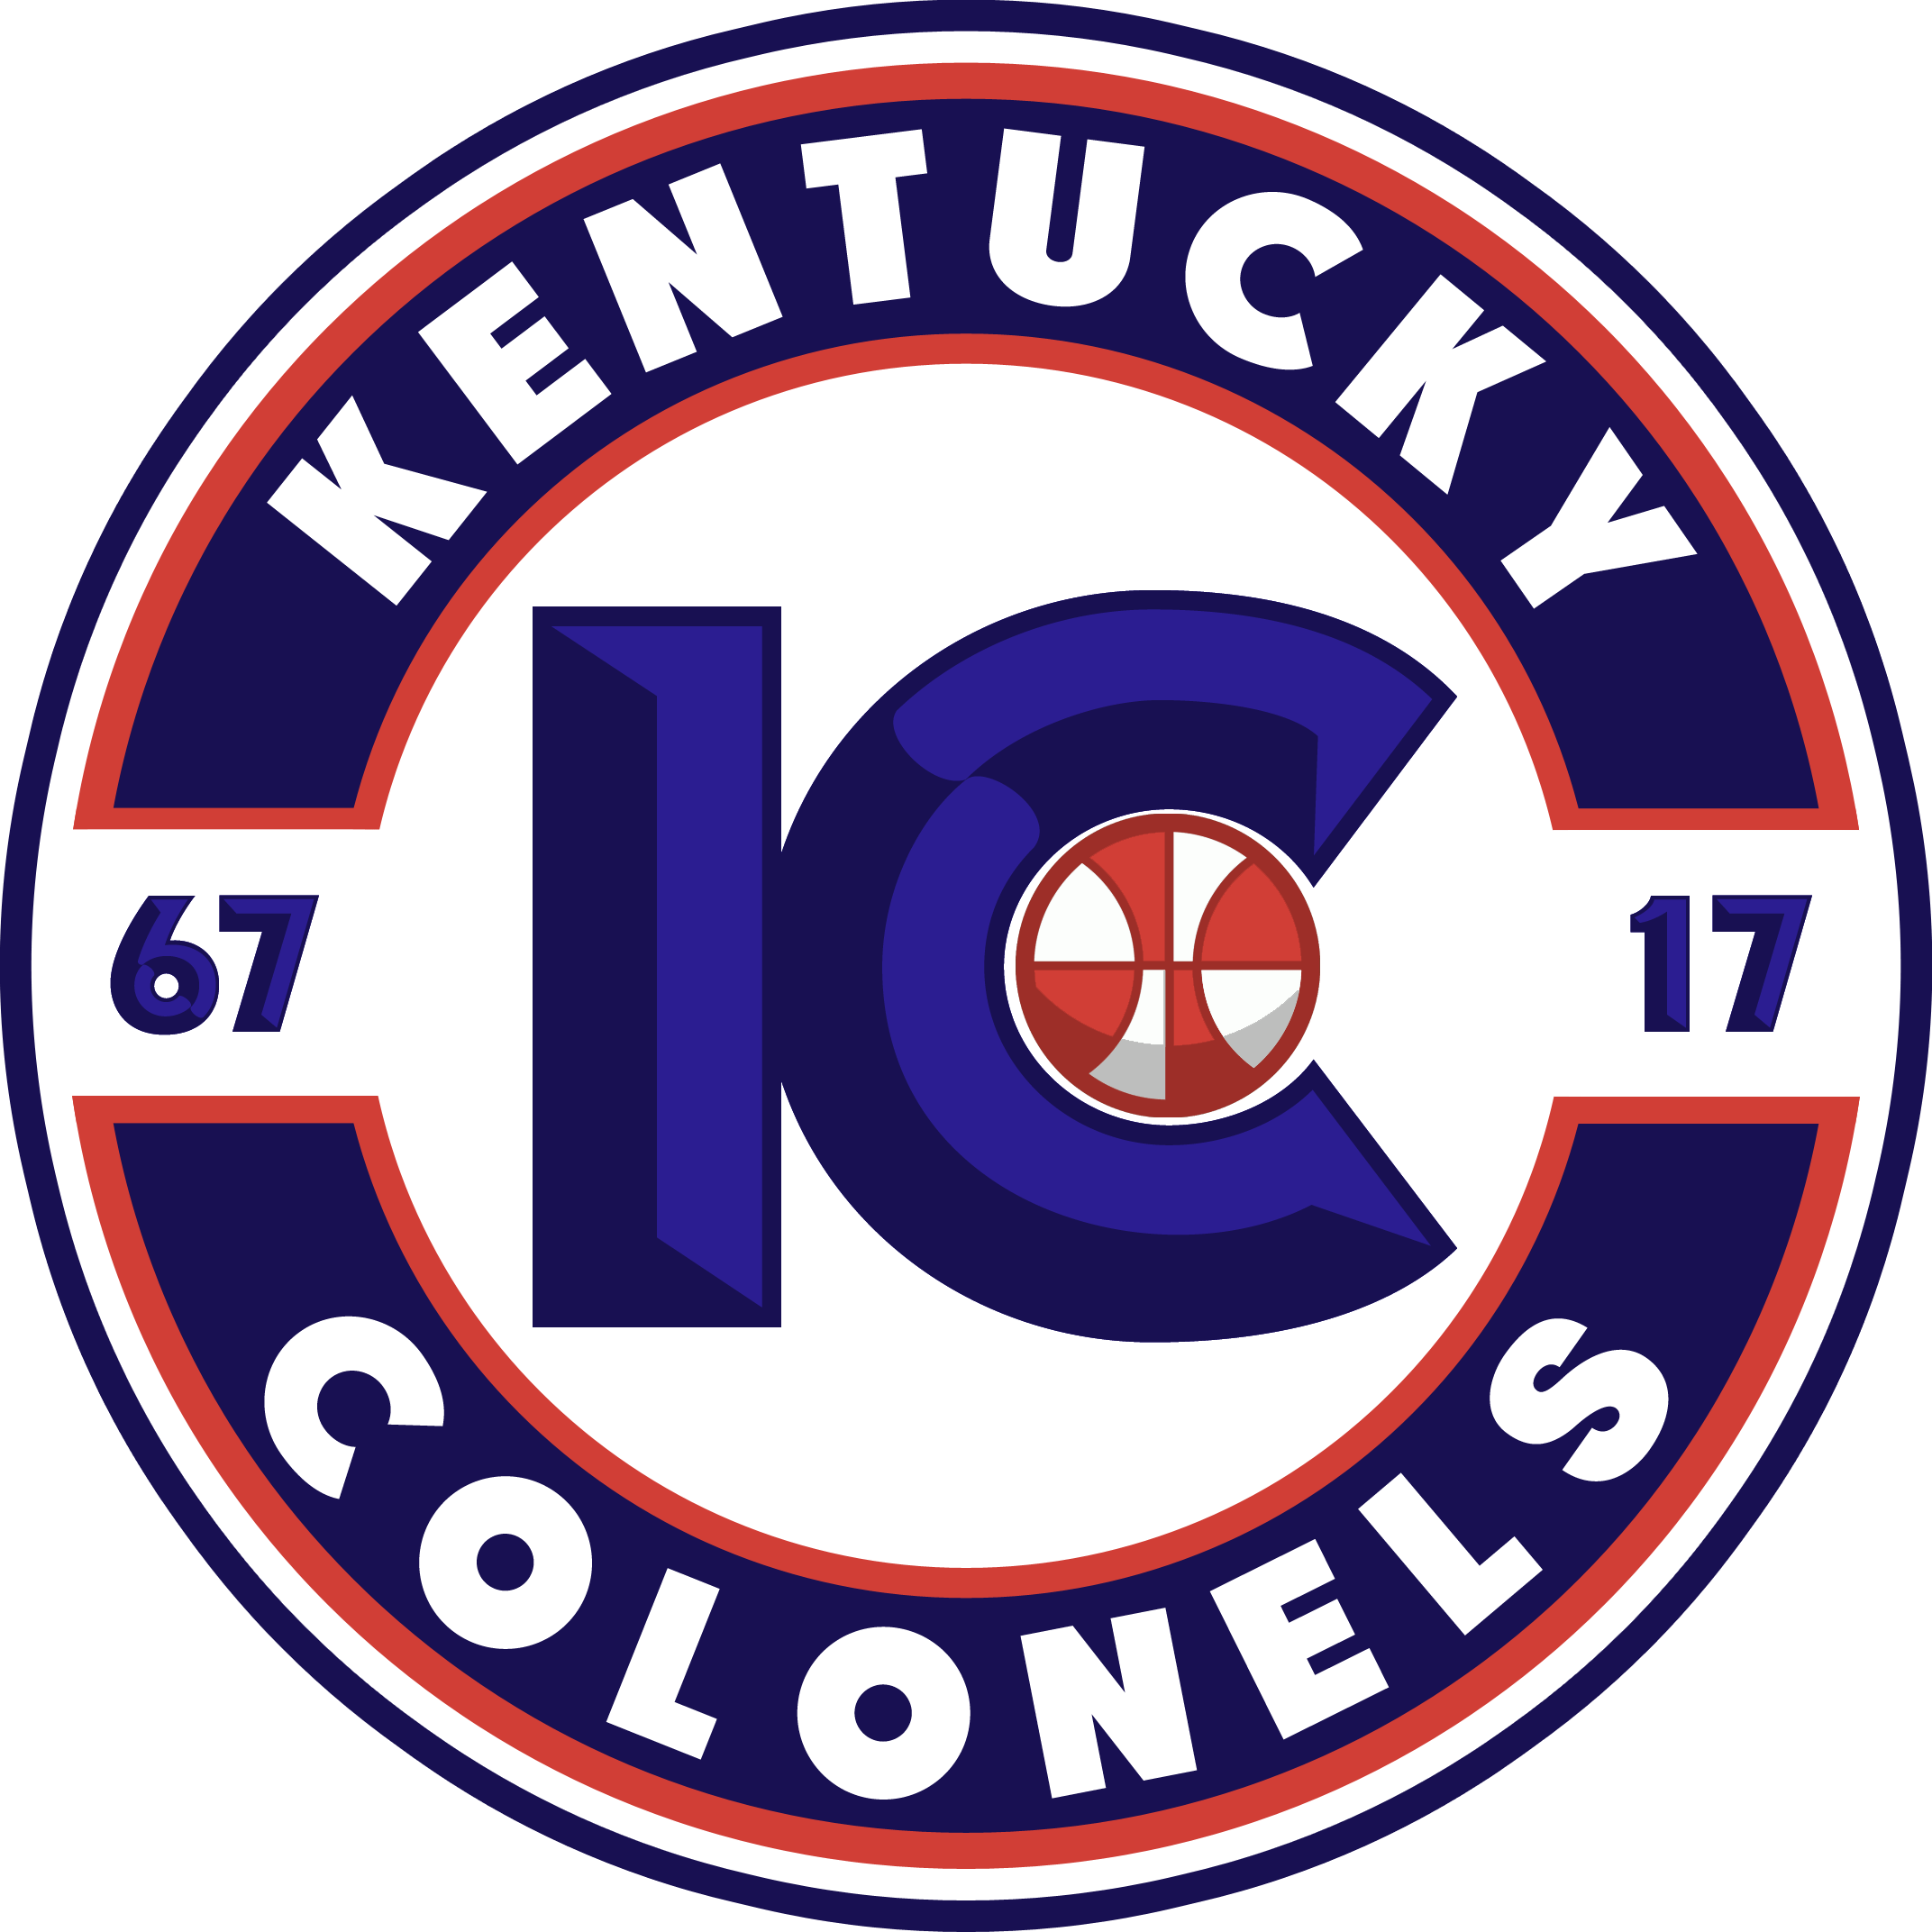 Kentucky Colonels (2144x2144)